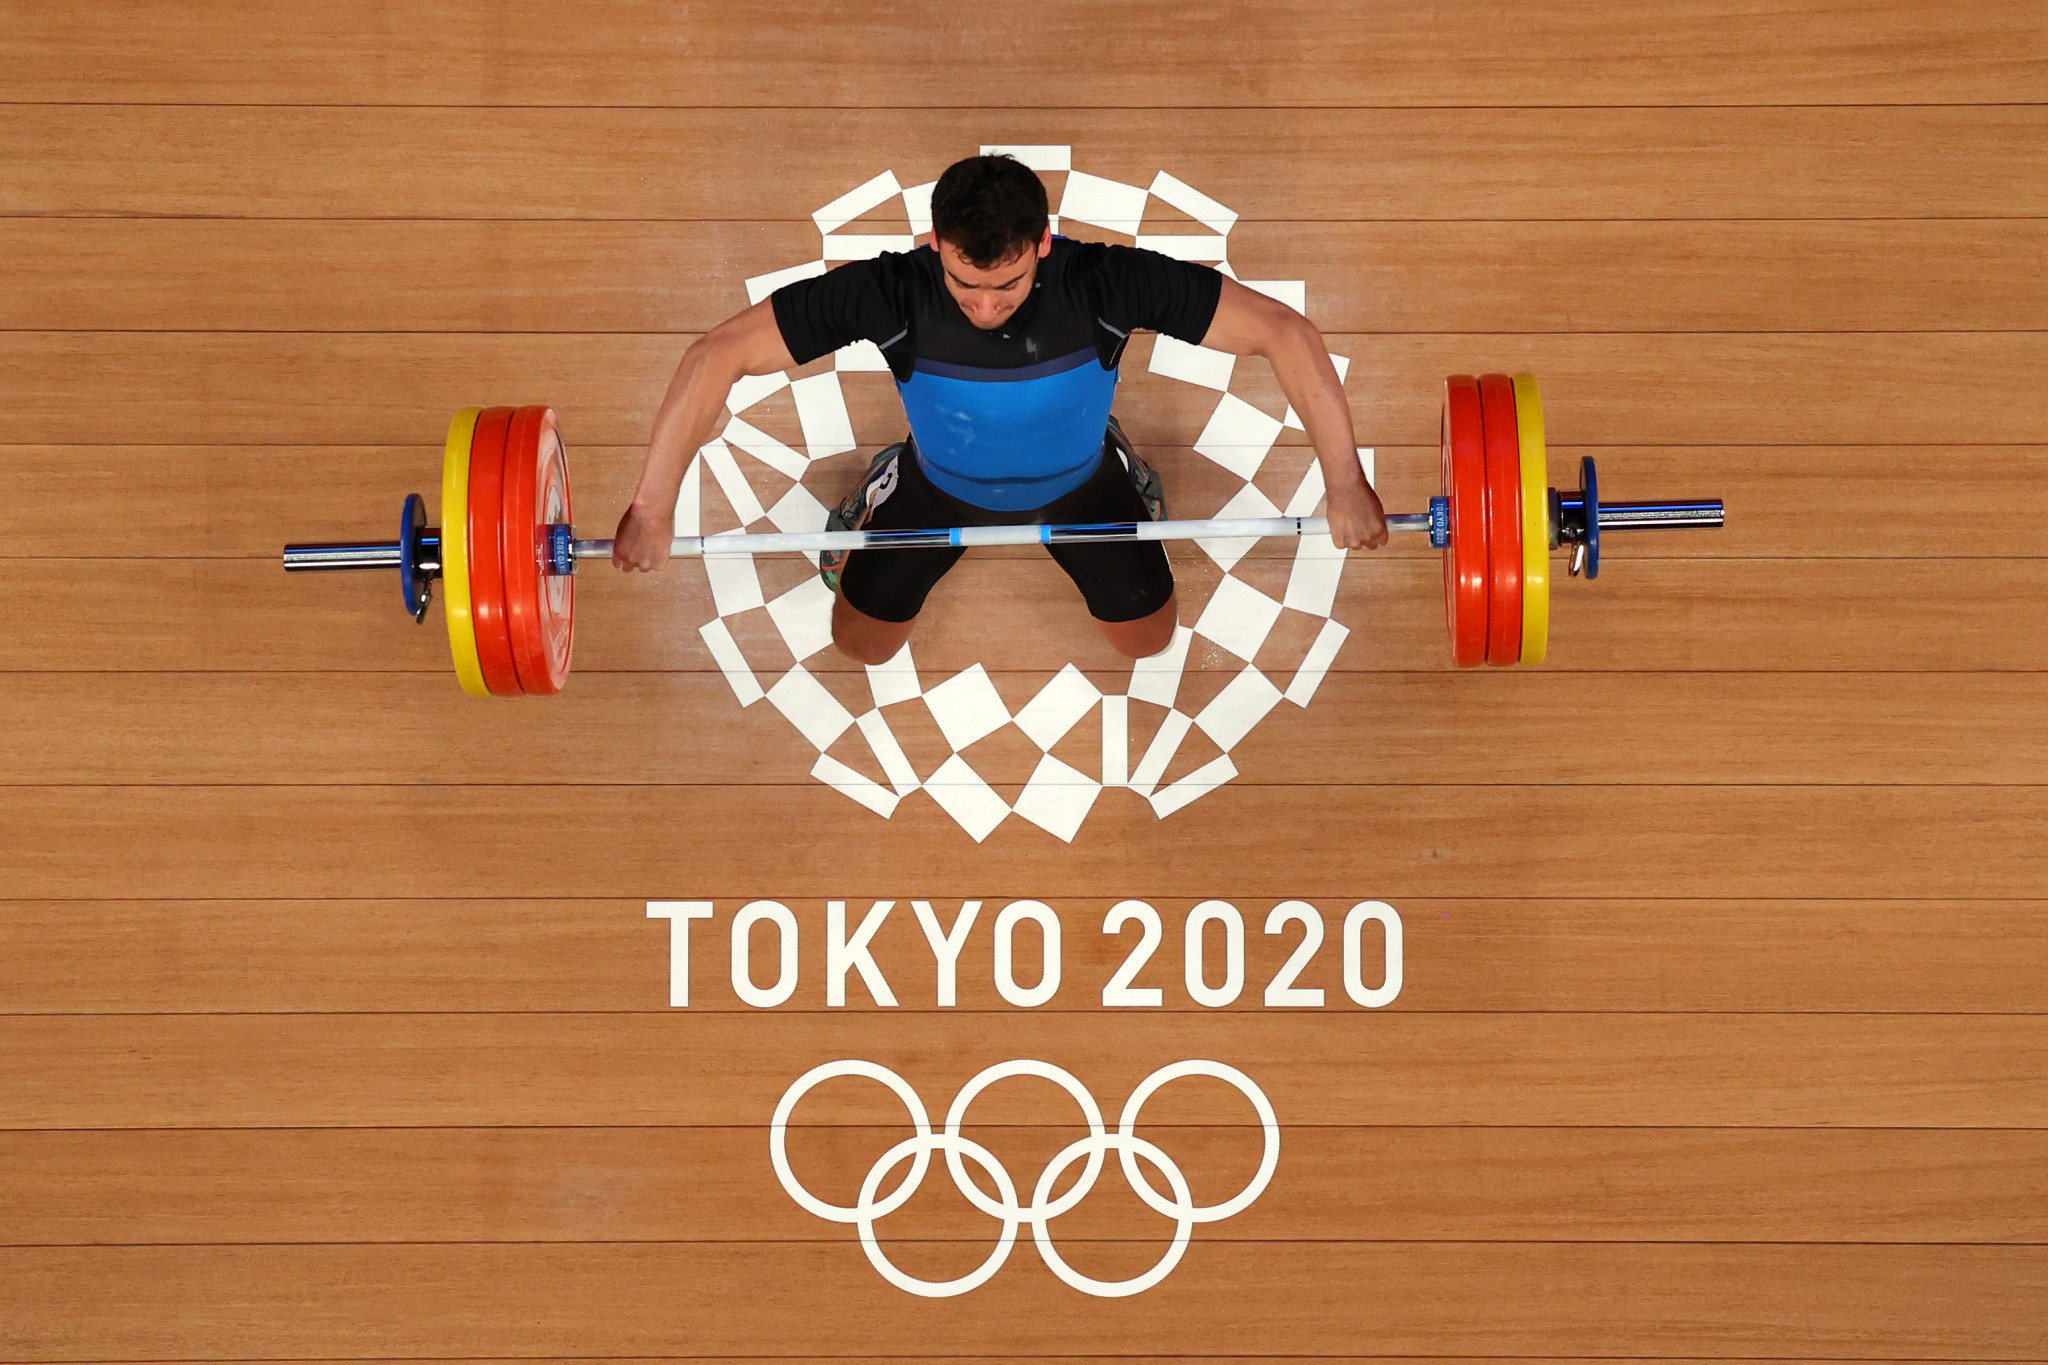 Ceremony held at National Stadium to celebrate anniversary of Tokyo 2020 Olympics